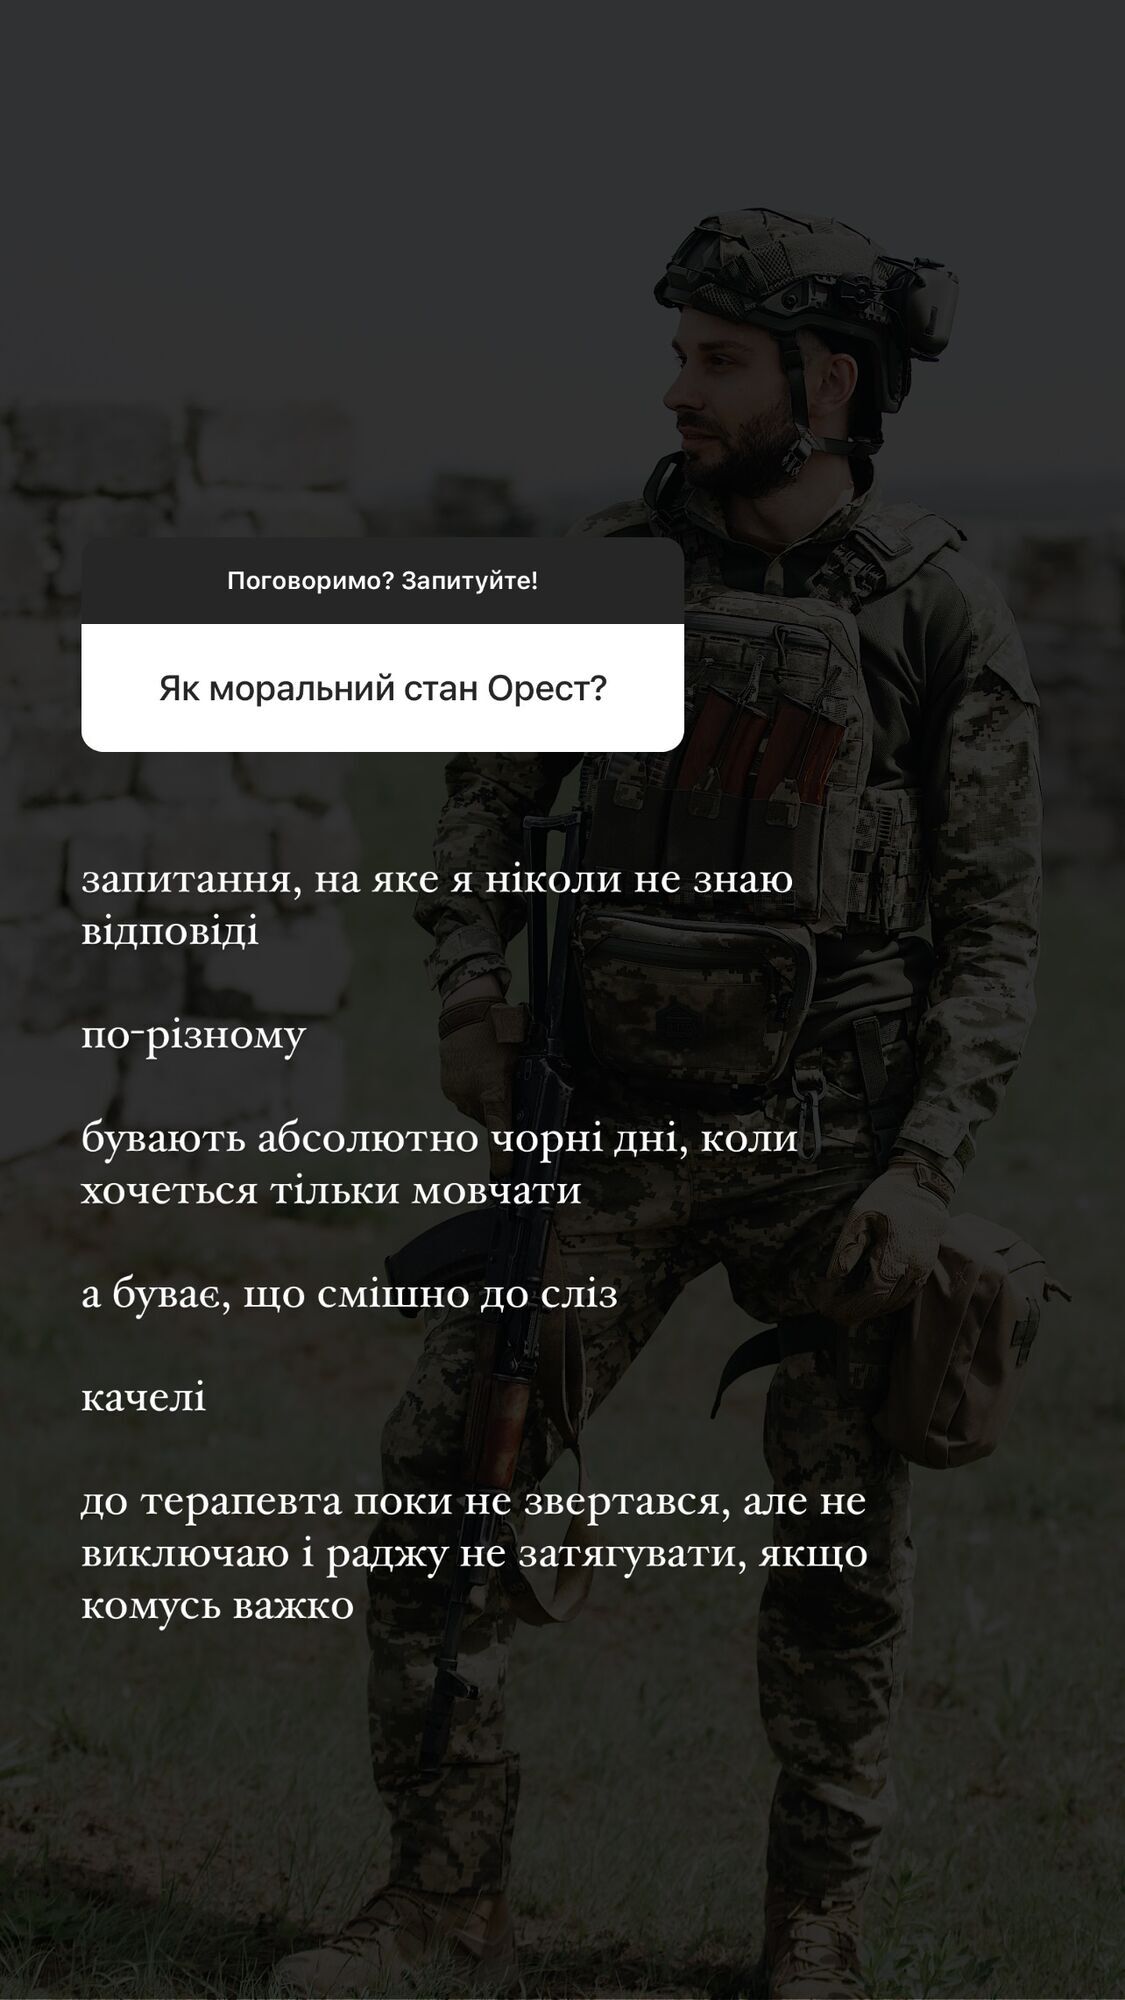 Ukrainian warrior TV presenter Orest Drymalovsky names the biggest threat at the front